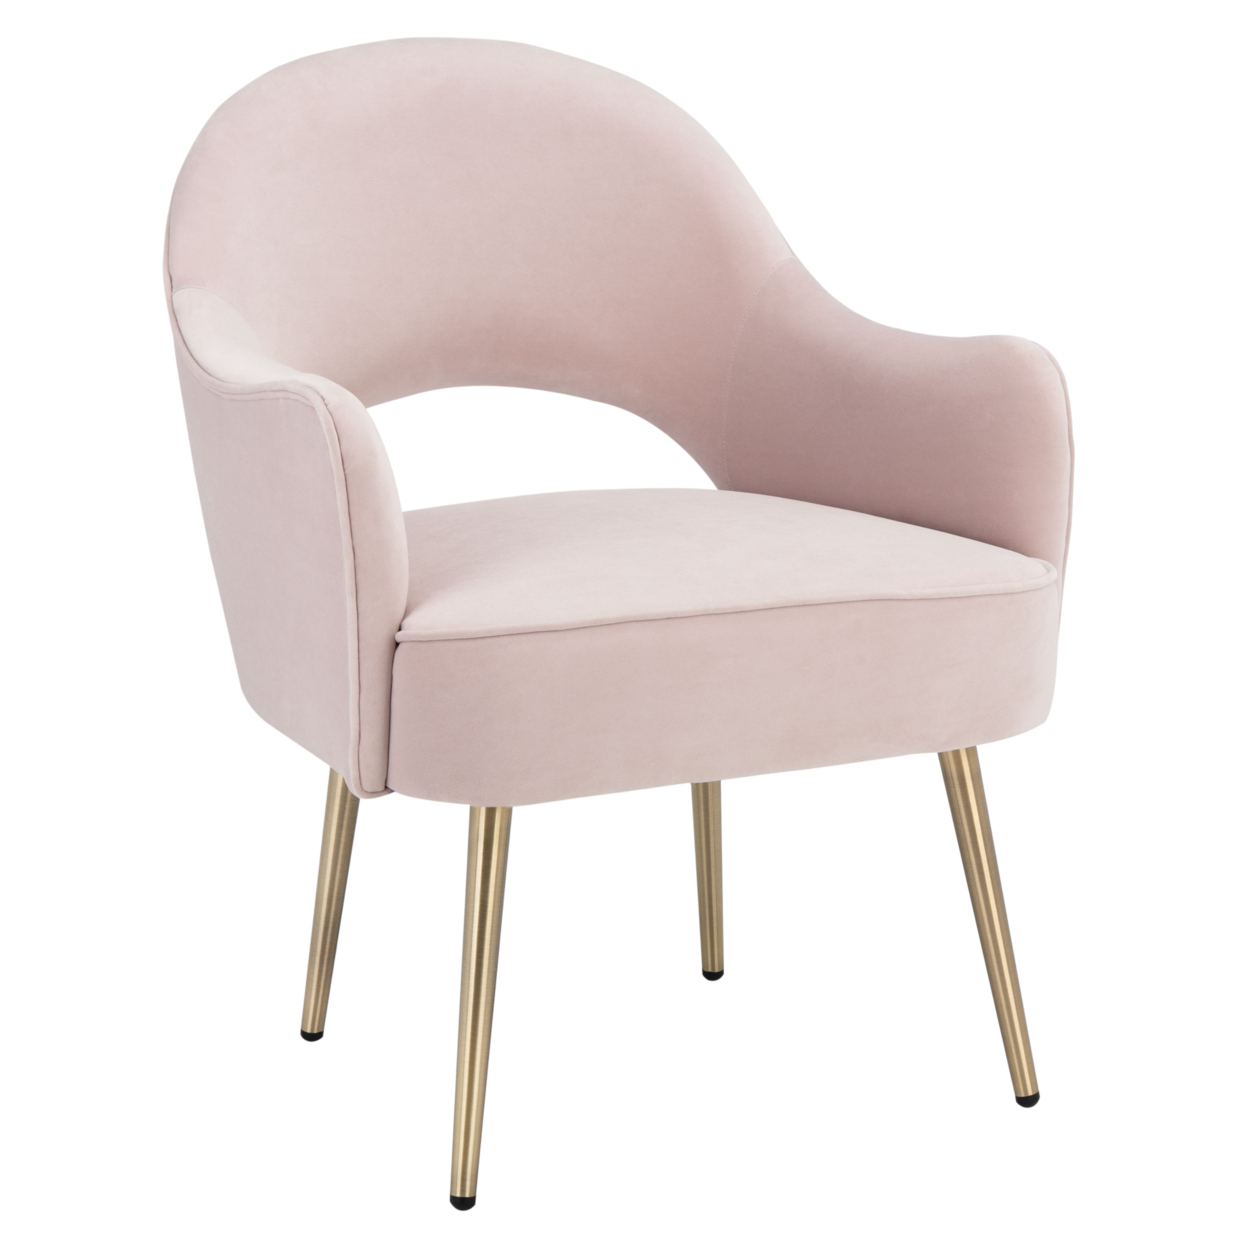 SAFAVIEH Dublyn Accent Chair Light Pink